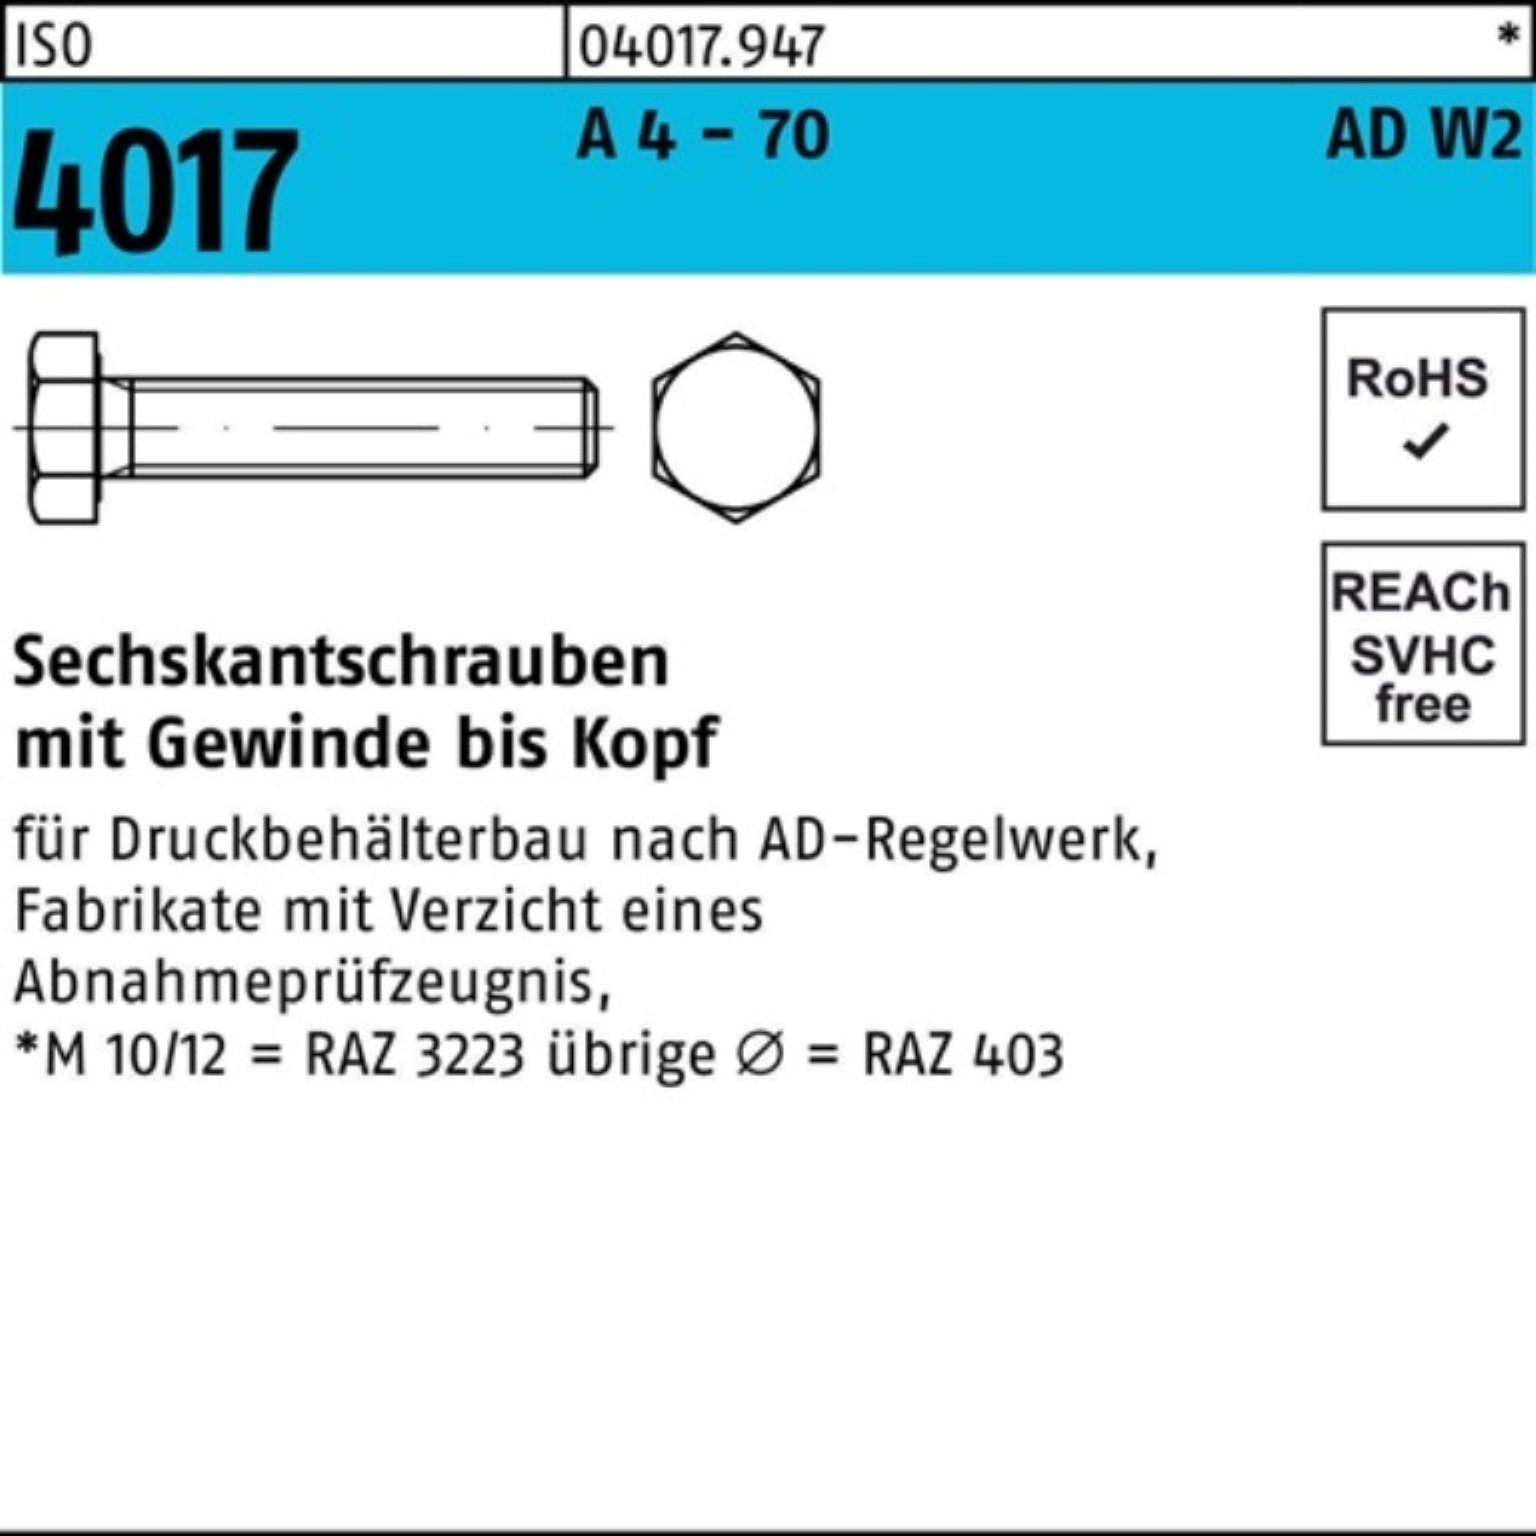 Bufab Sechskantschraube 100er Pack Sechskantschraube ISO 4017 VG M12x 16 A 4 - 70 AD-W2 50 St